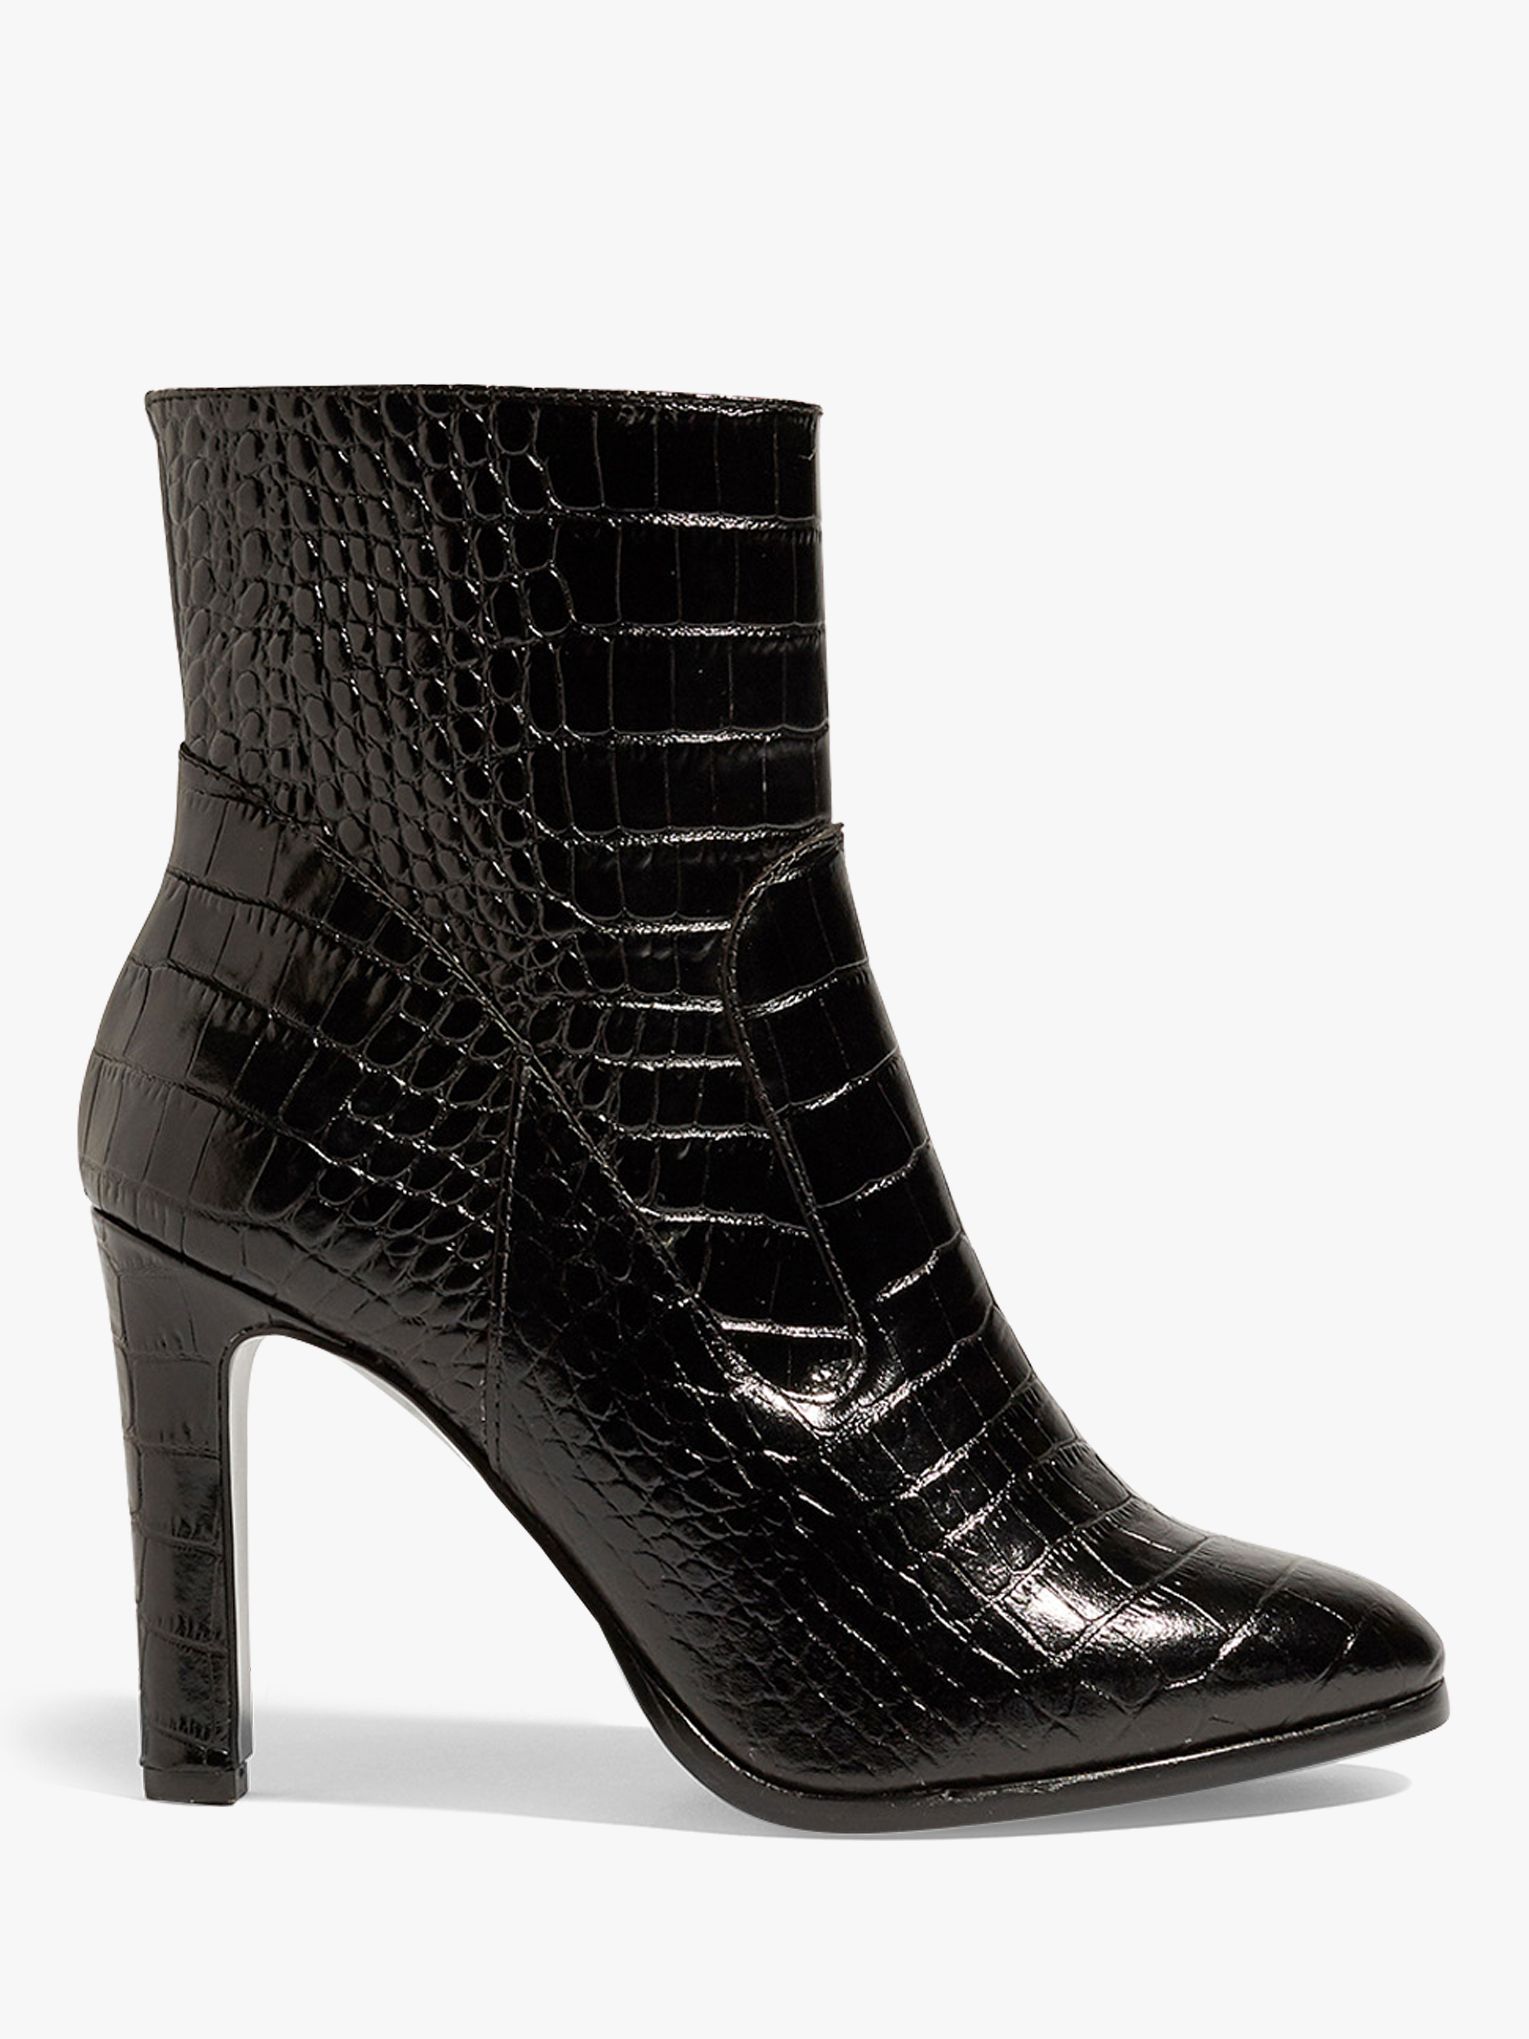 Karen Millen Croc Leather Above Ankle Boots, Black at John Lewis & Partners